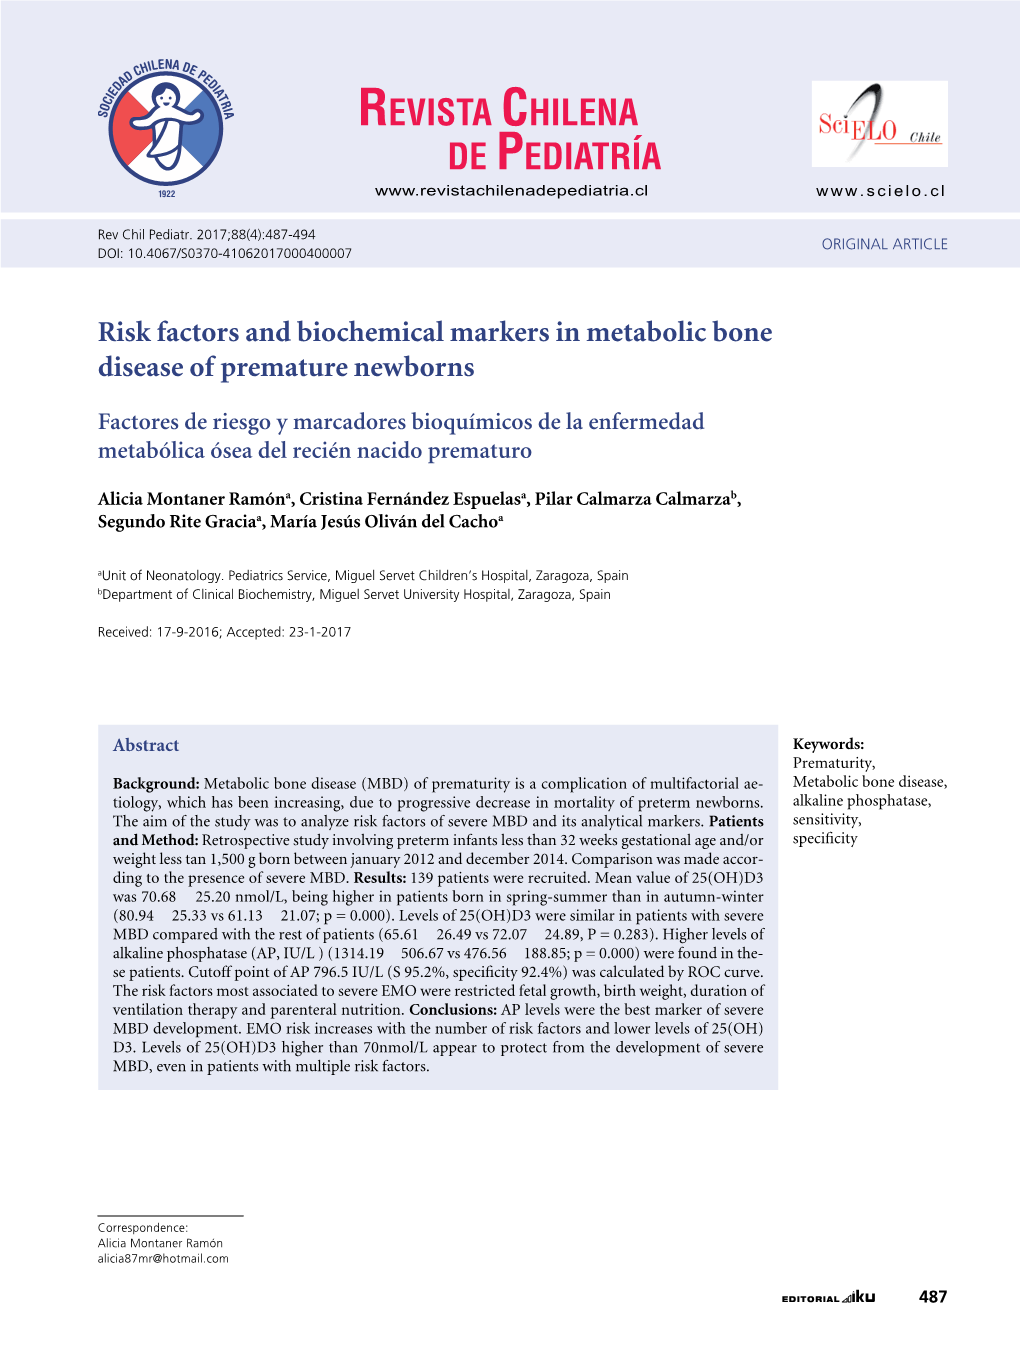 Risk Factors and Biochemical Markers in Metabolic Bone Disease of Premature Newborns